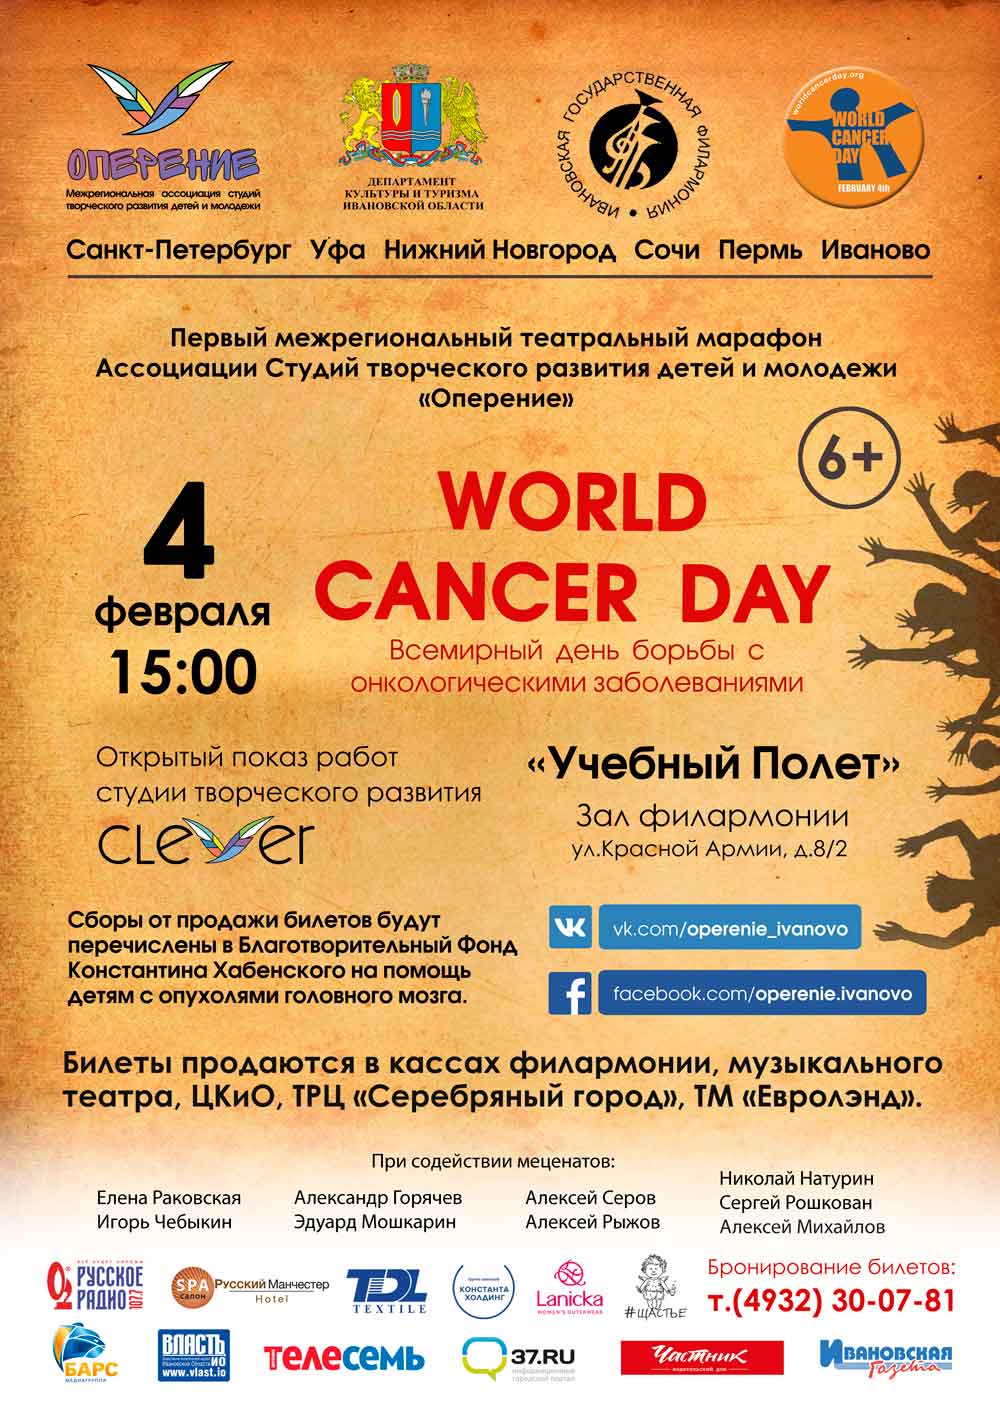 World cancer day 4 февраля 2018